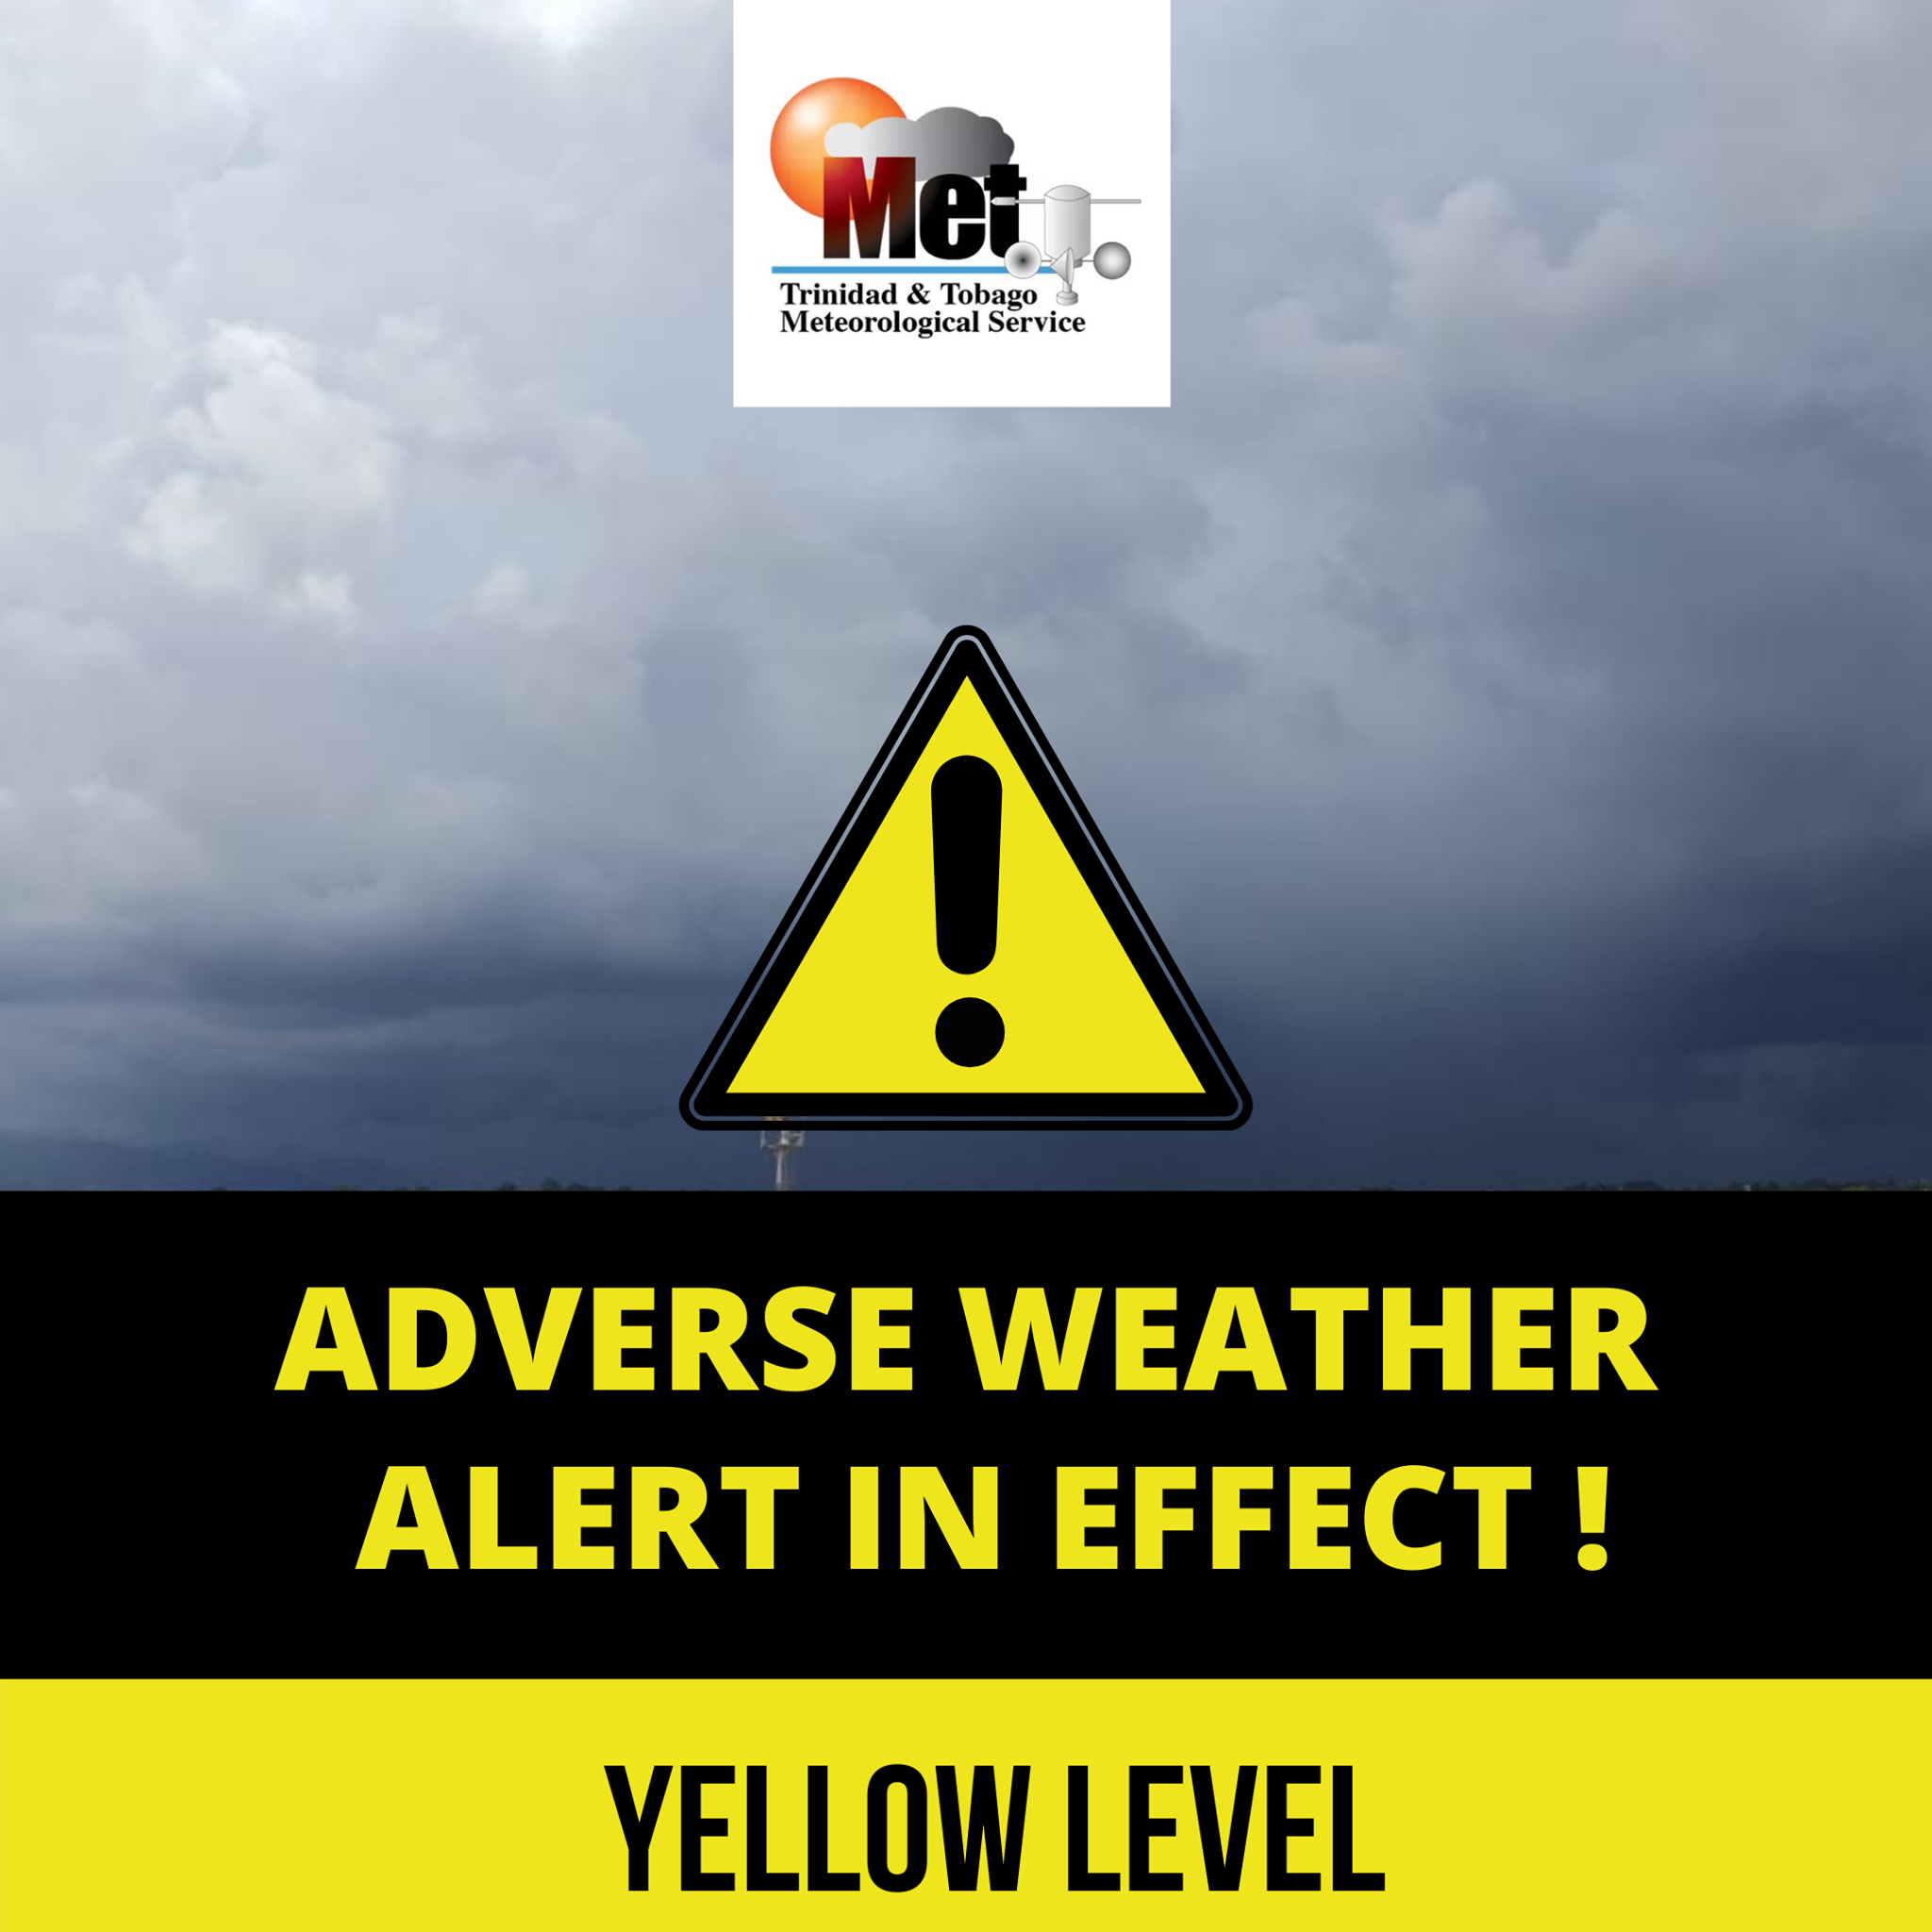 Met Office Issues Adverse Weather Alert #4